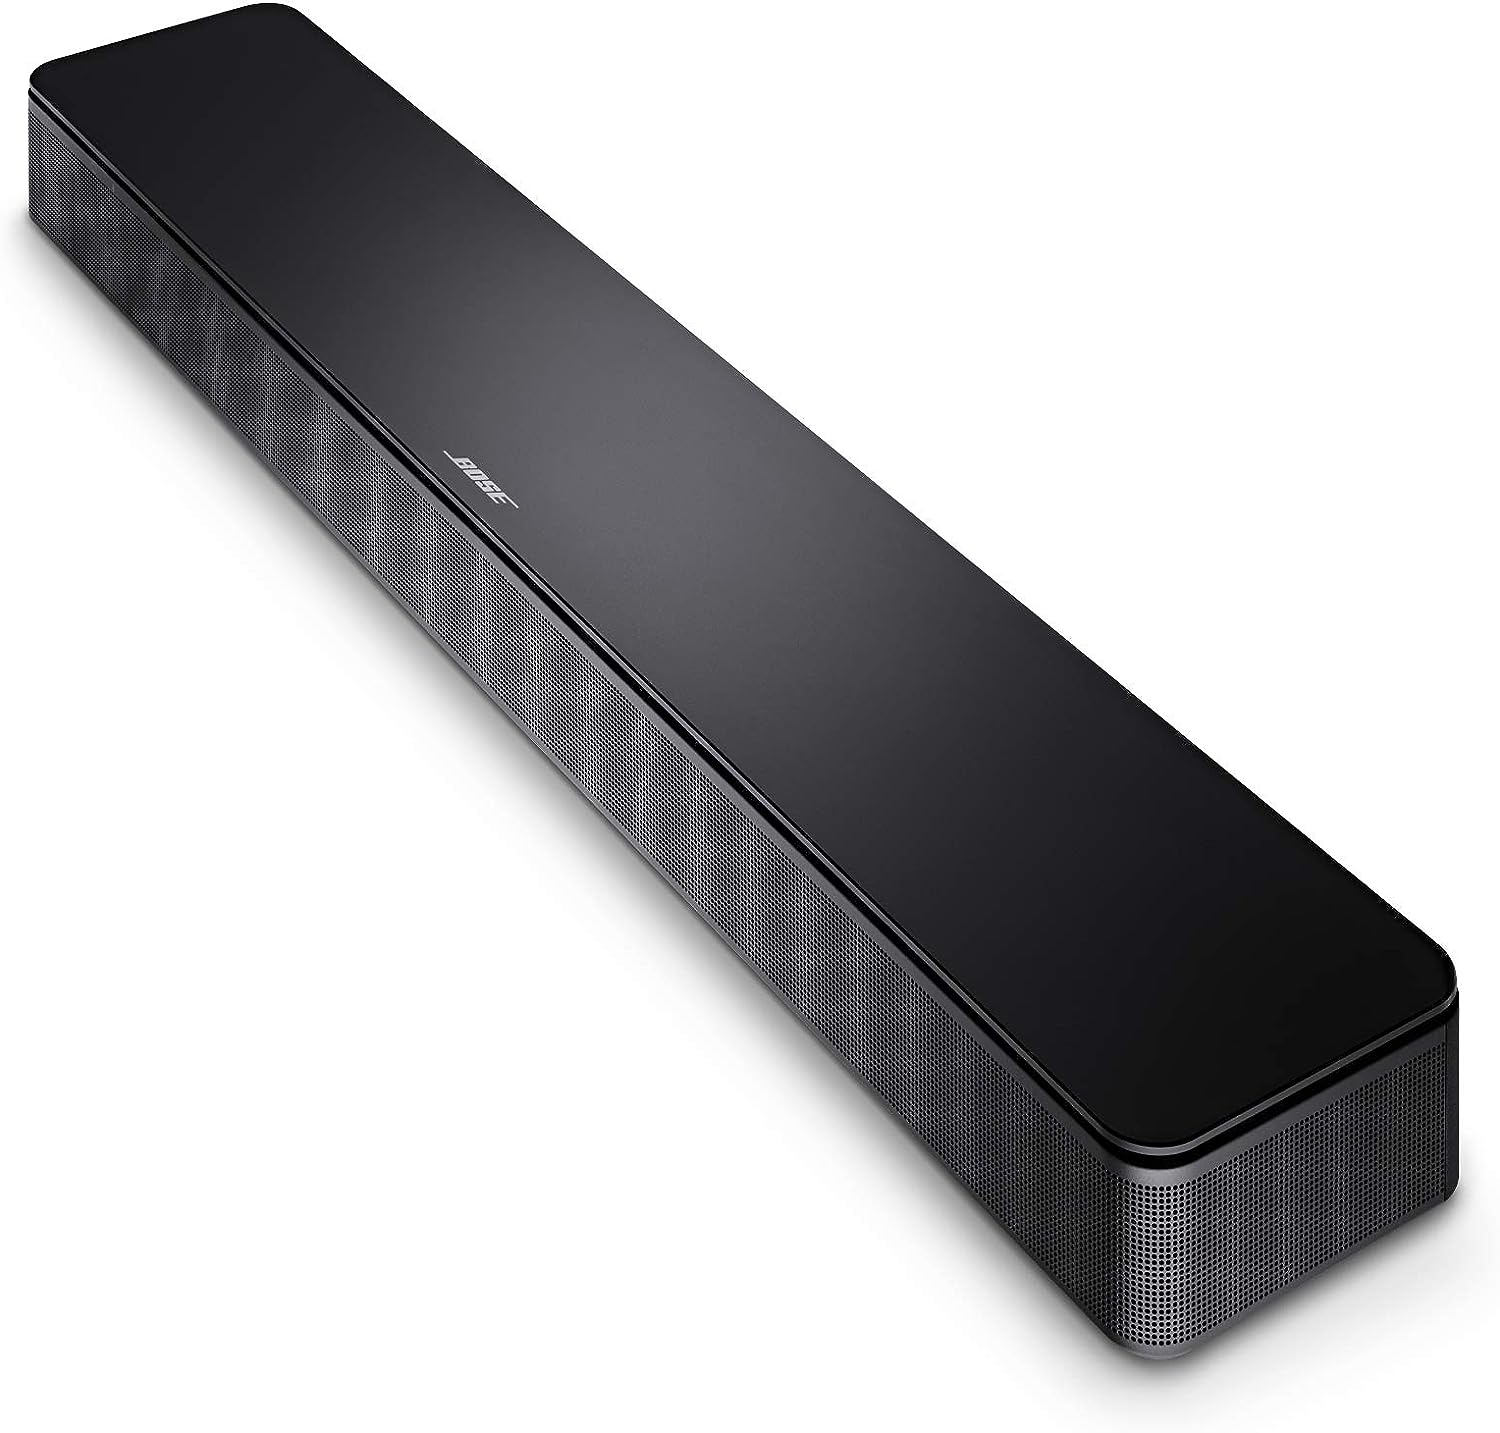 Bose TV Speaker Bluetooth Wireless Soundbar with HDMI-ARC Connectivity - Black (Certified Refurbished)